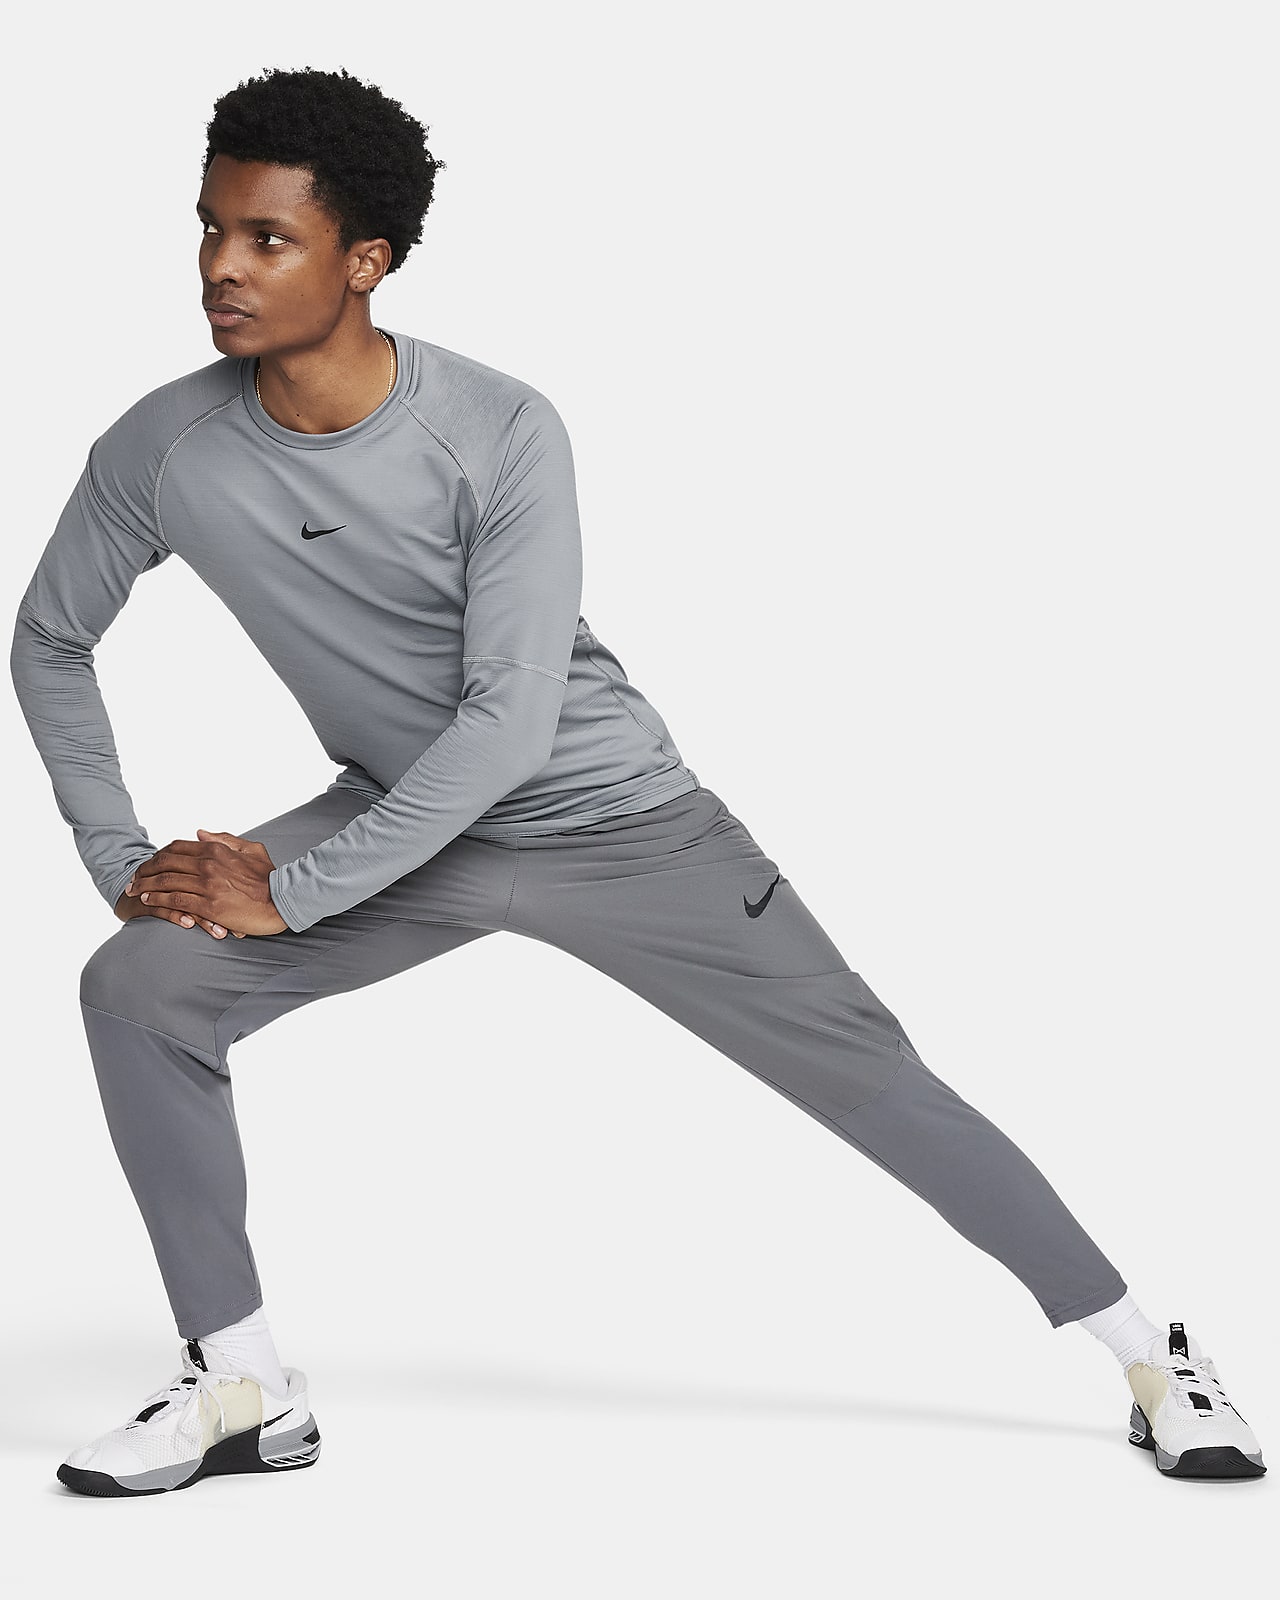 Nike Pro Combat Tights Long size Large, Men's Fashion, Activewear